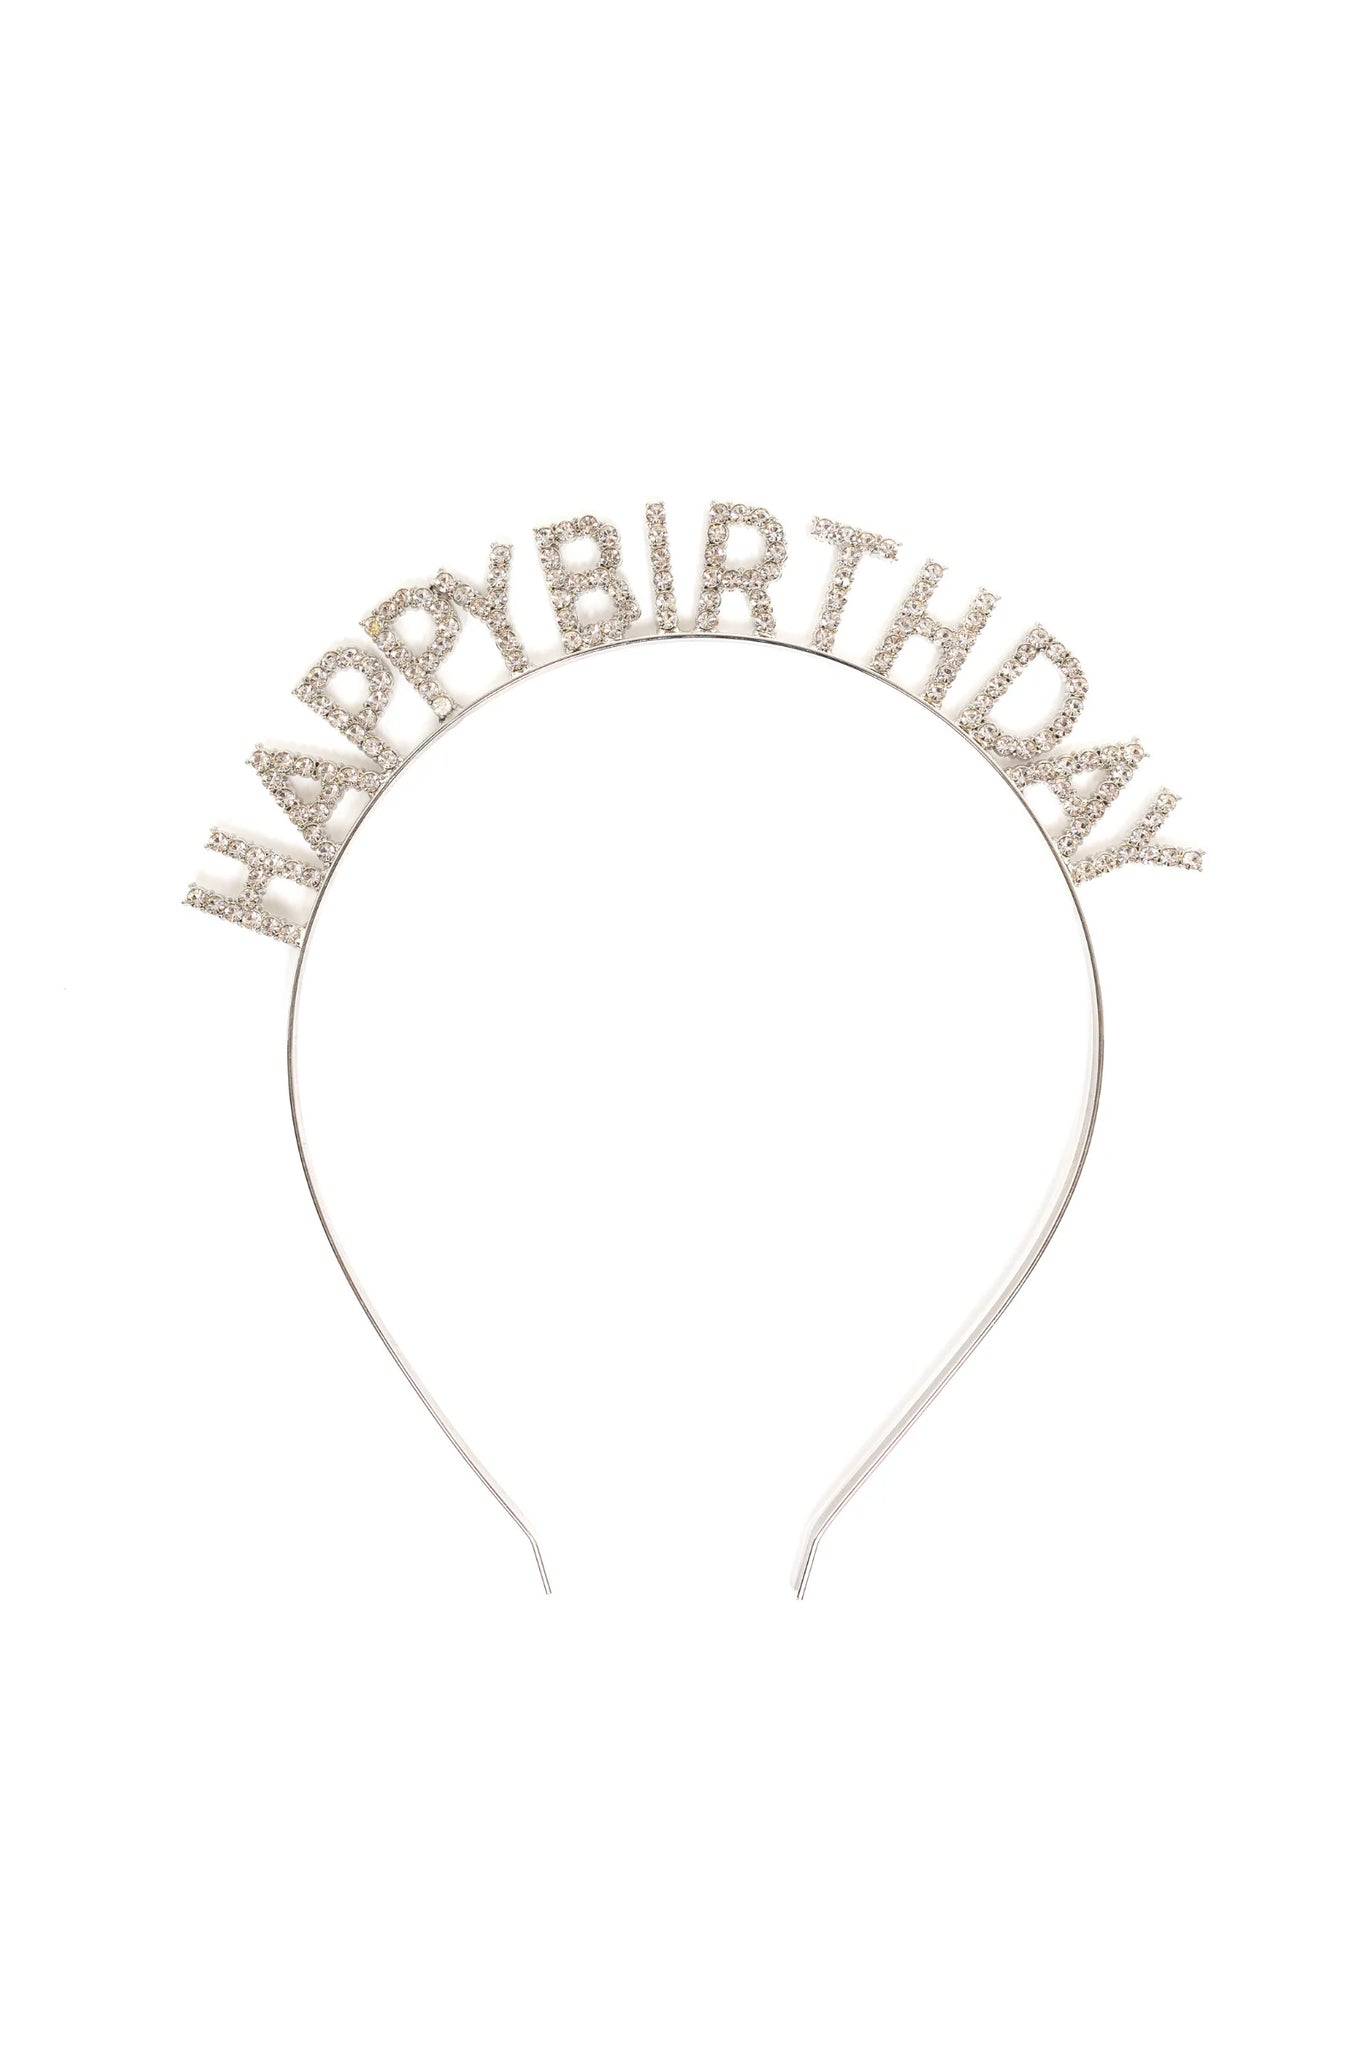 Happy Birthday Rhinestone Headband - Ages 3+